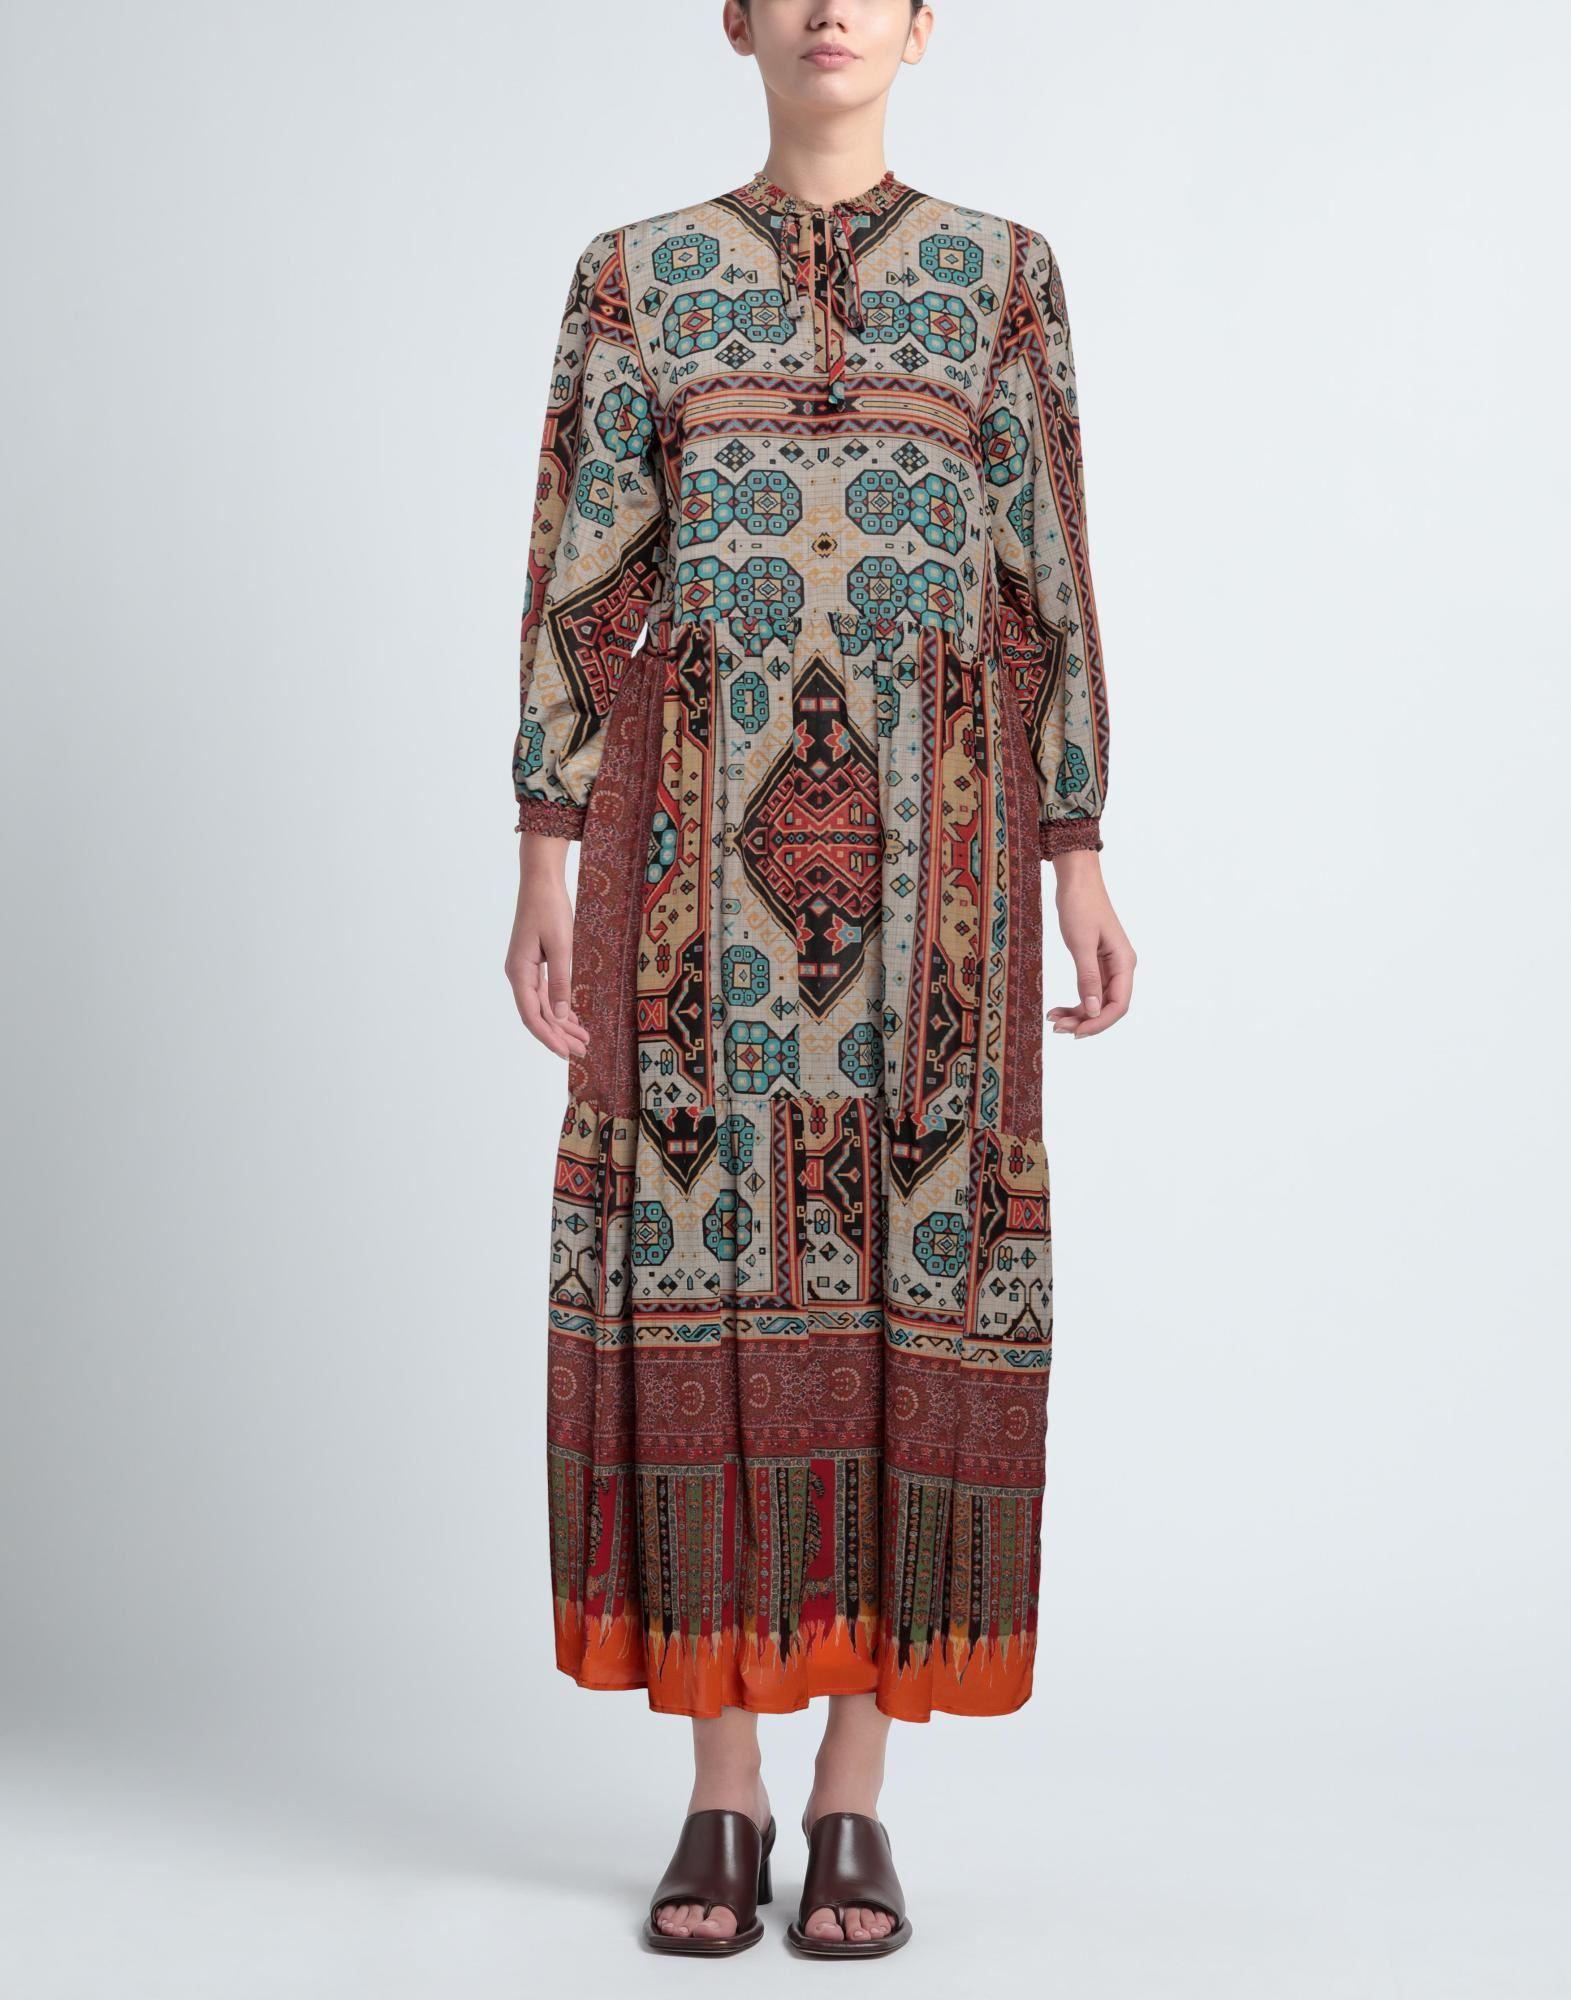 Pierre-Louis Mascia Gerry Floral Print Wrap Dress, Xs | Elysewalker